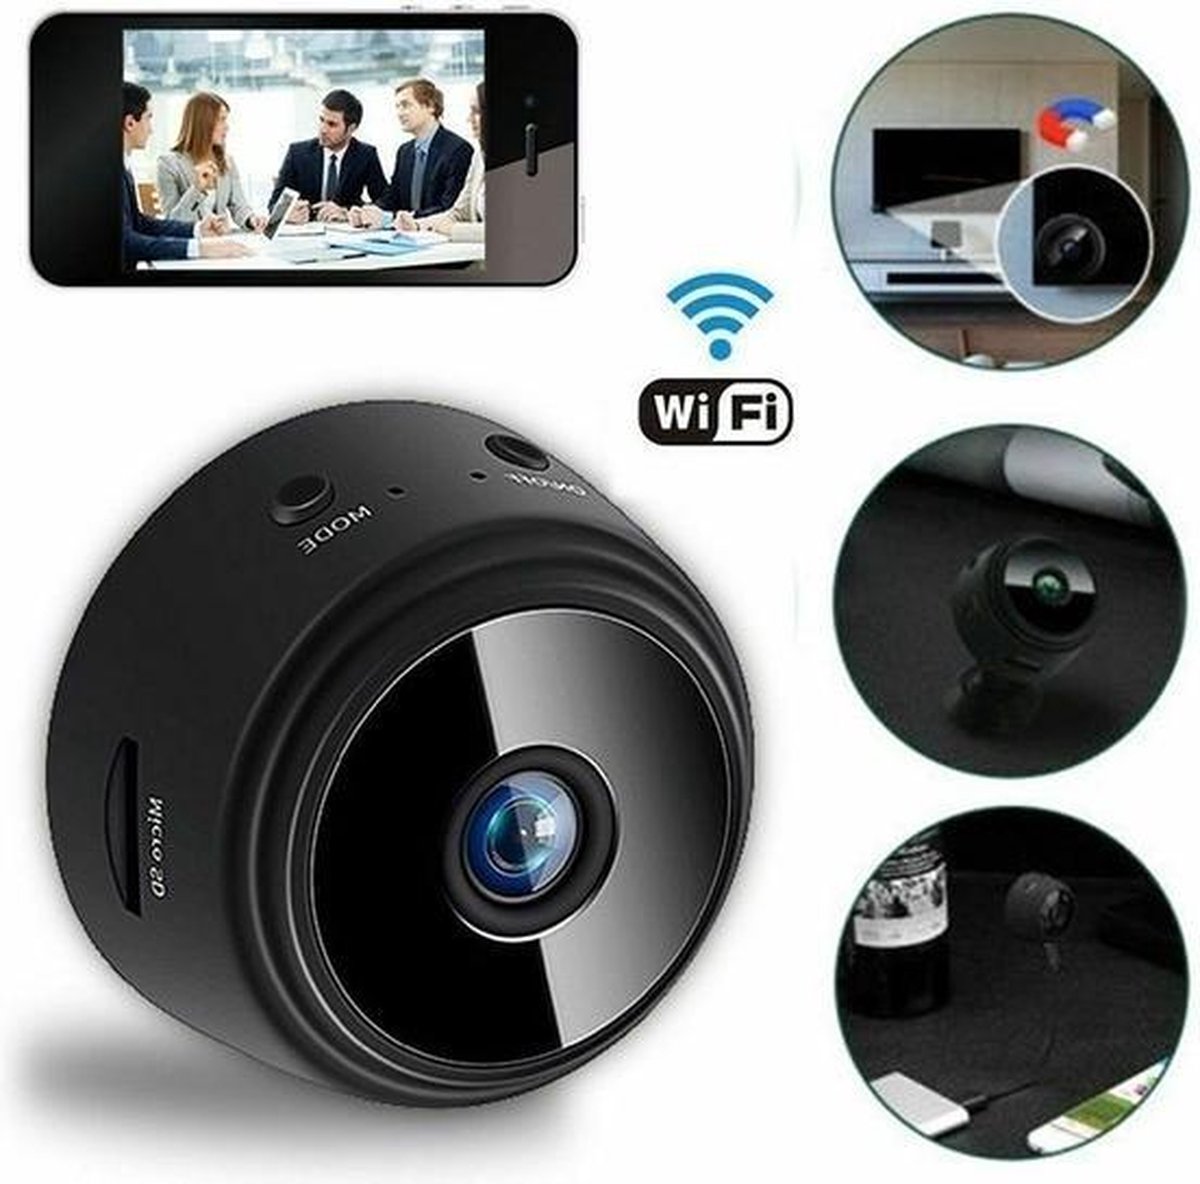 Verborgen Beveiligingscamera Wifi Camera - Full HD 1080p - Bewegingsdetector - Erizon